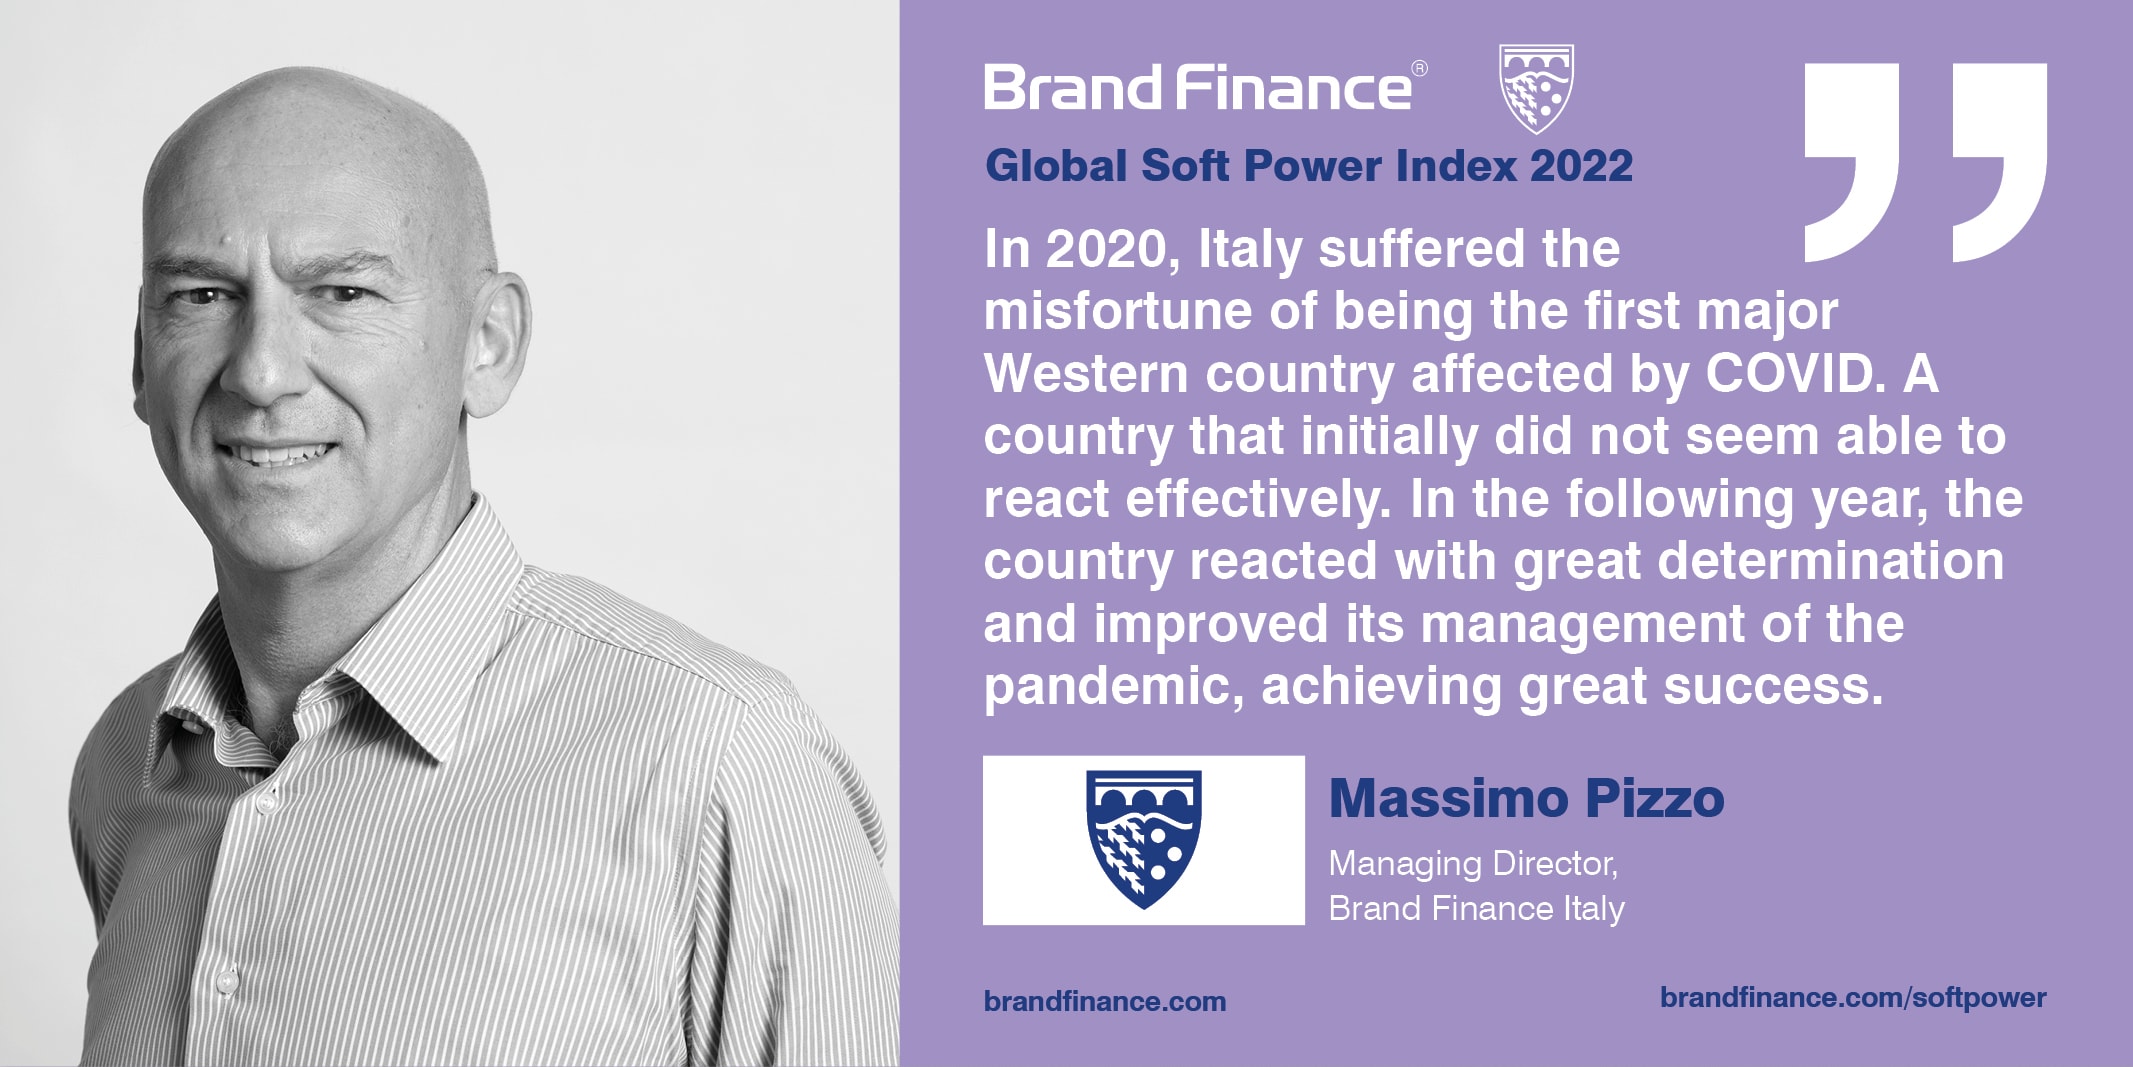 Massimo Pizzo, Managing Director, Brand Finance Italy